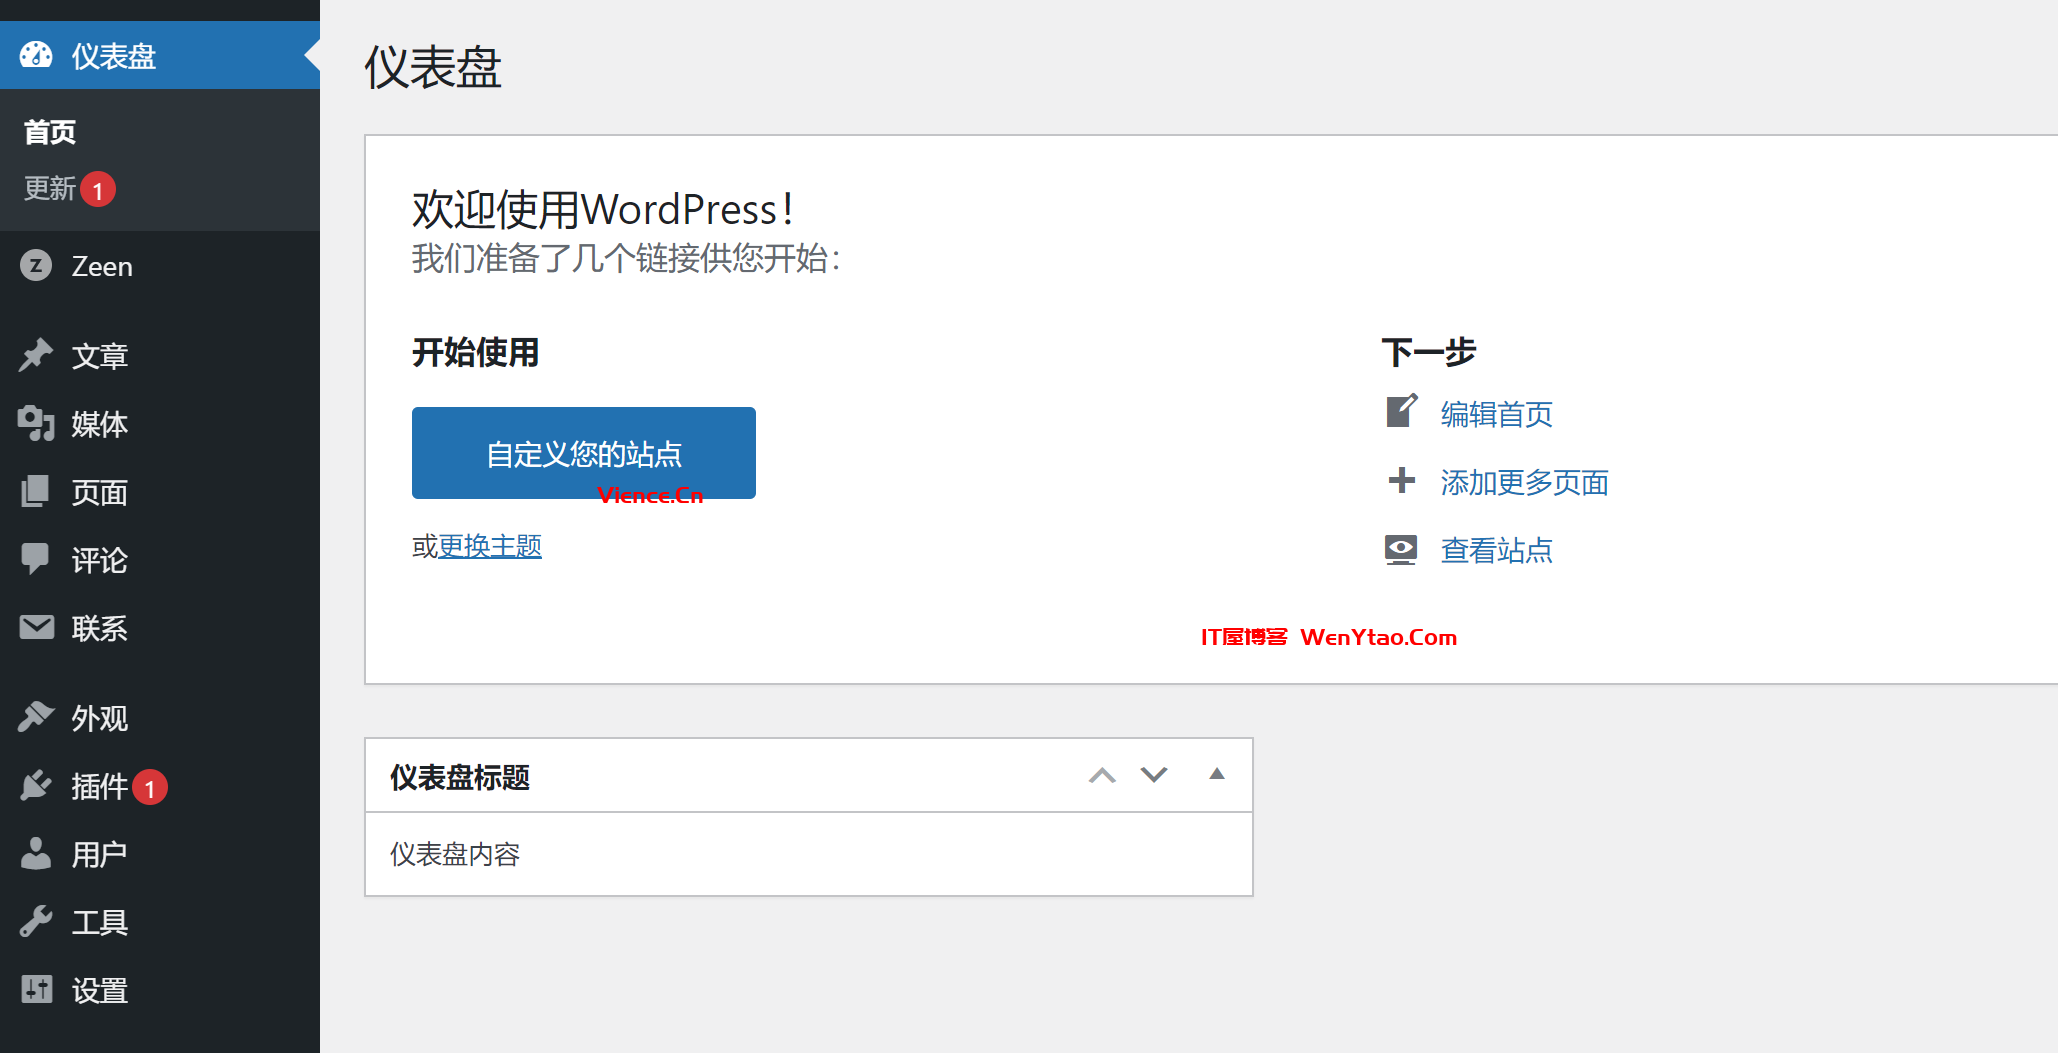  Wordpress customized dashboard